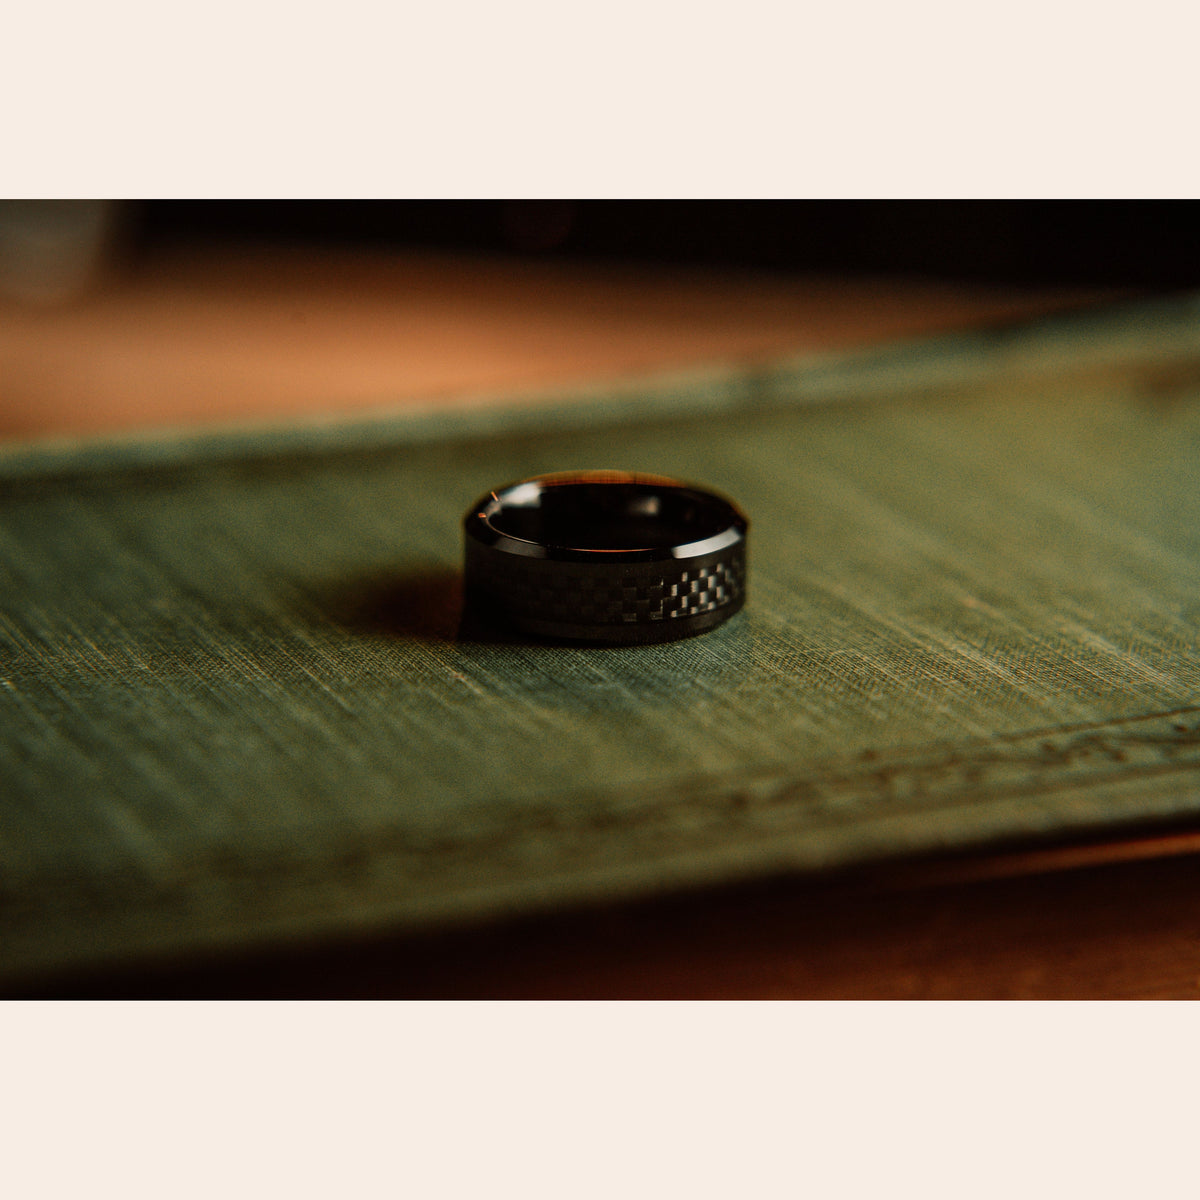 The “Ferrari” Ring